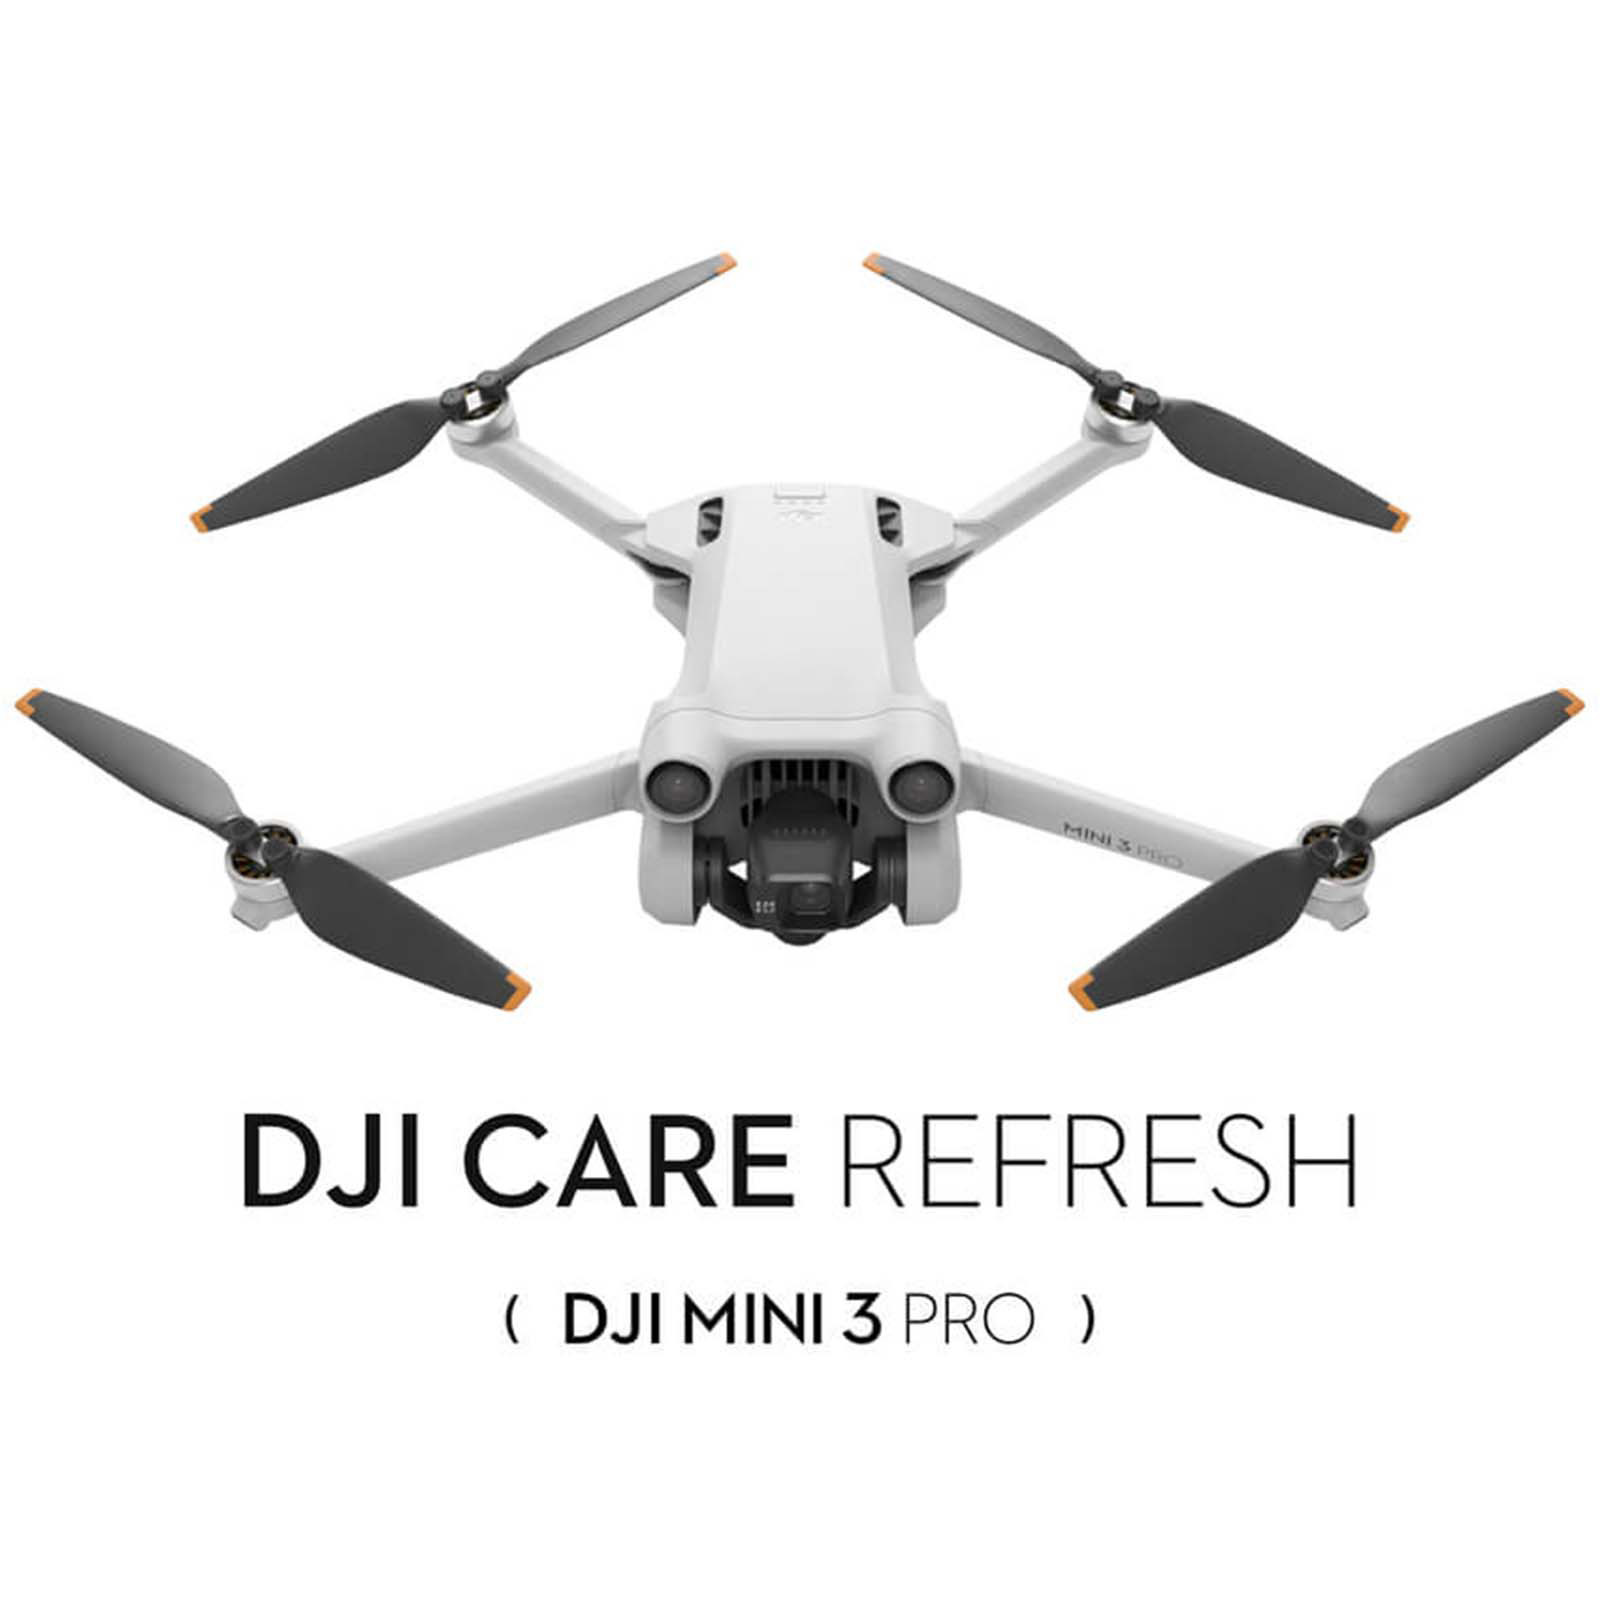 Image of DJI Mini 3 Pro Care Refresh Code -2 Year